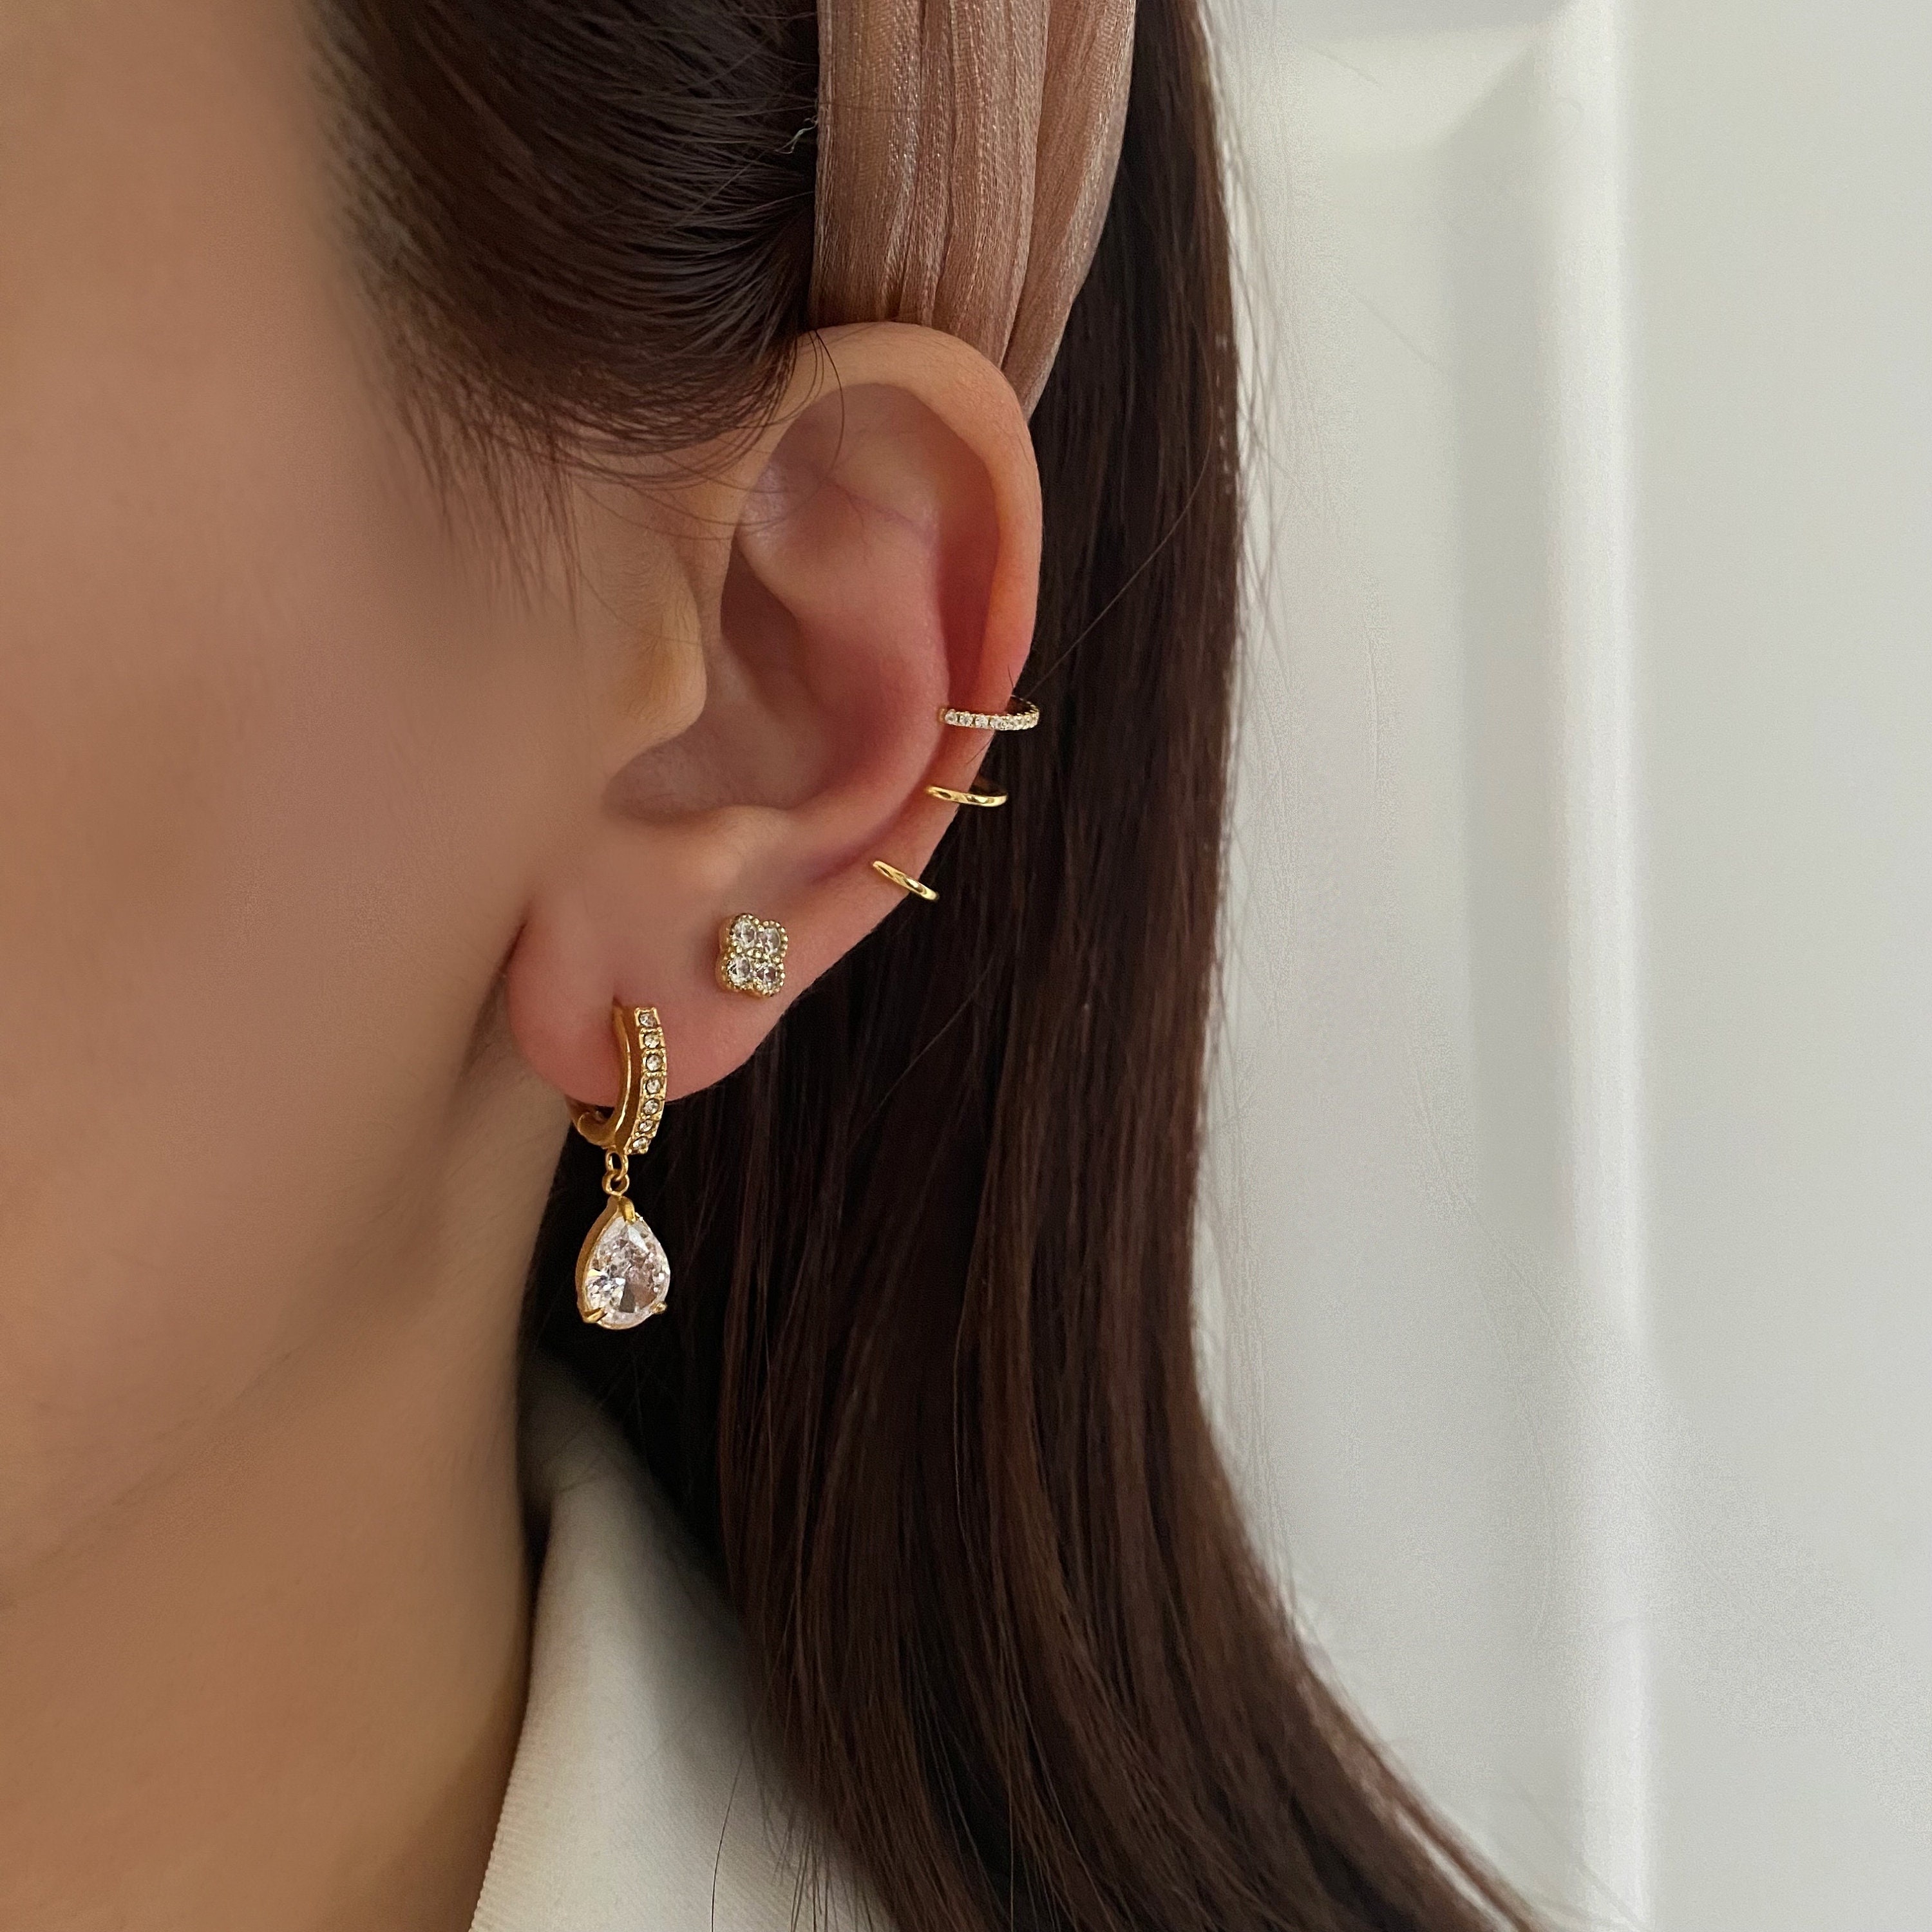 etsy lv earrings